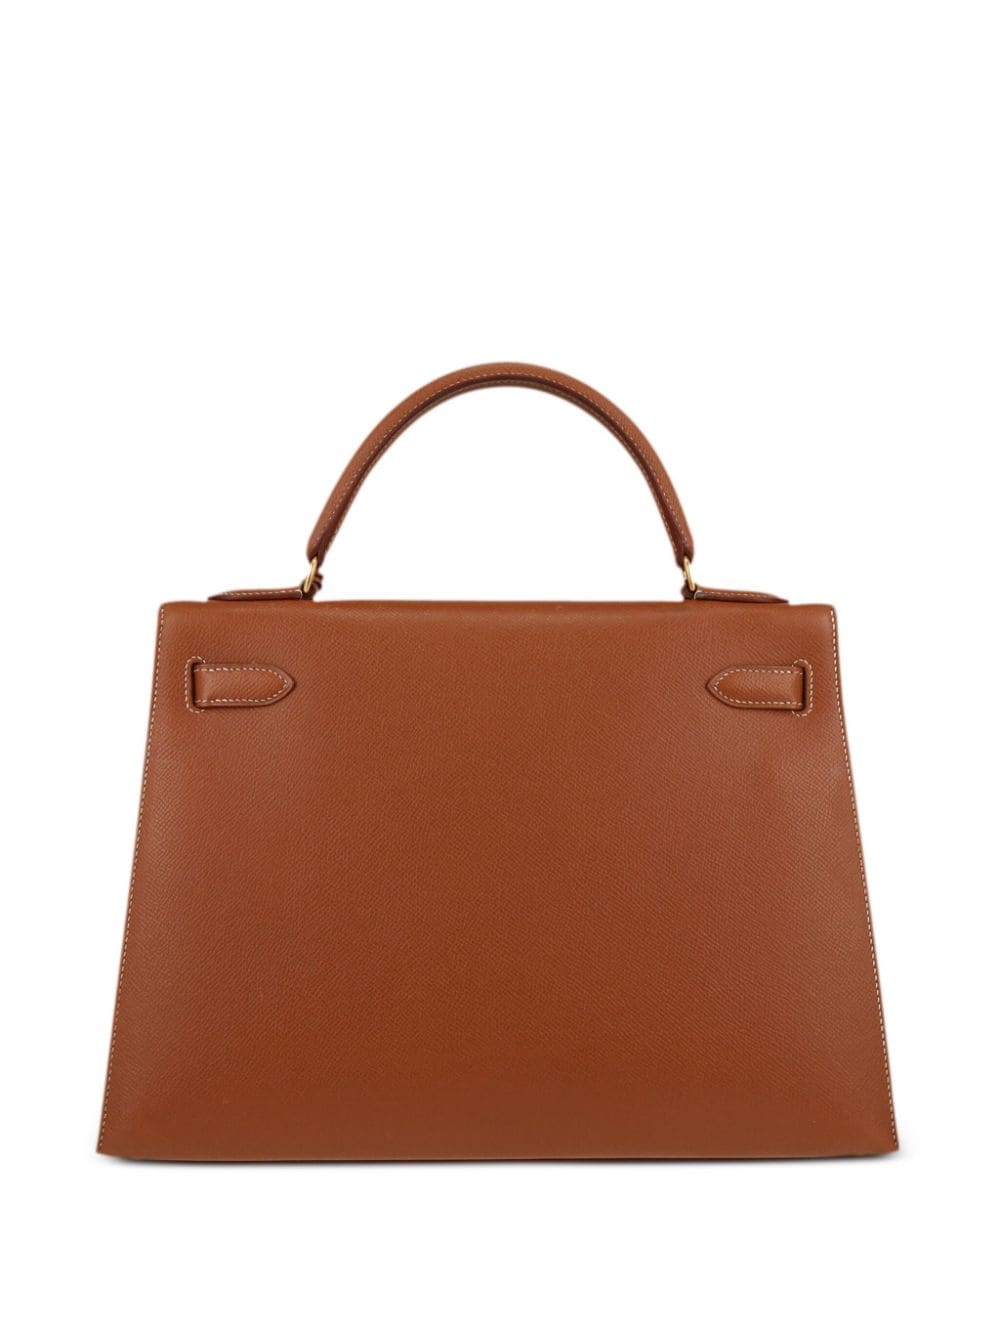 Hermès pre-owned Kelly 32 handbag - Bruin